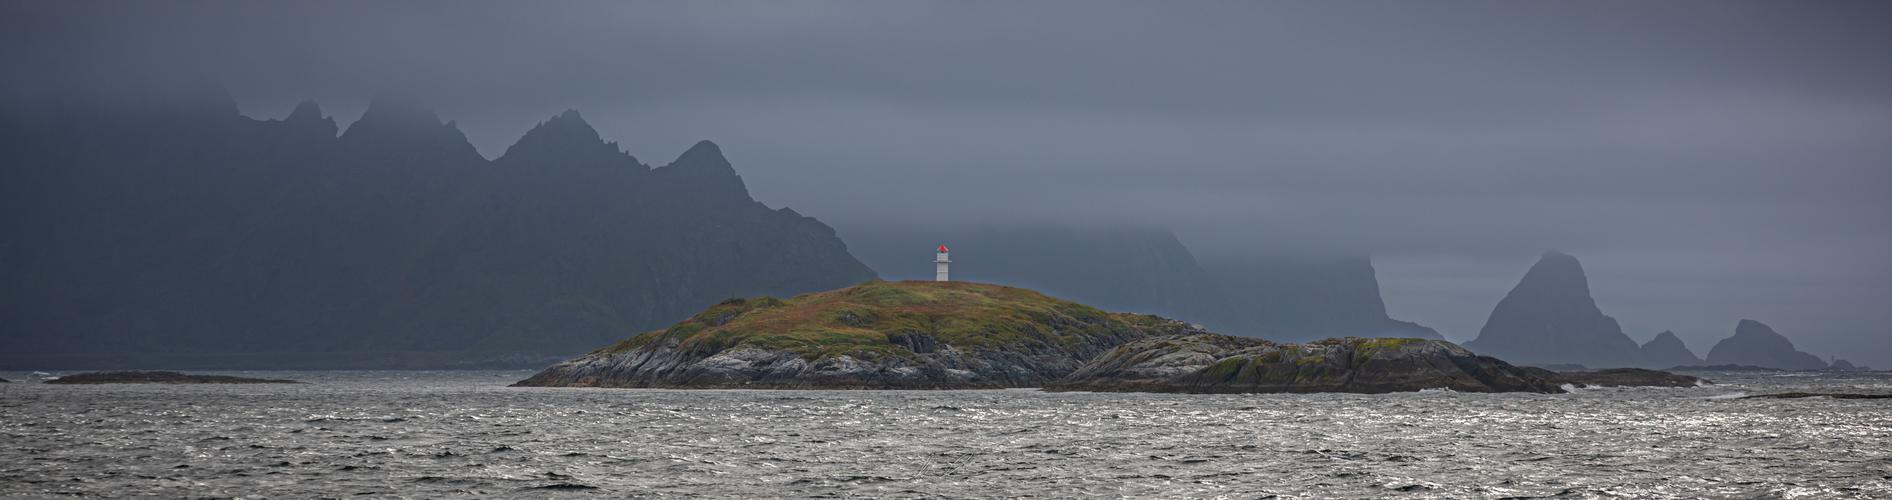 Andøya coastline